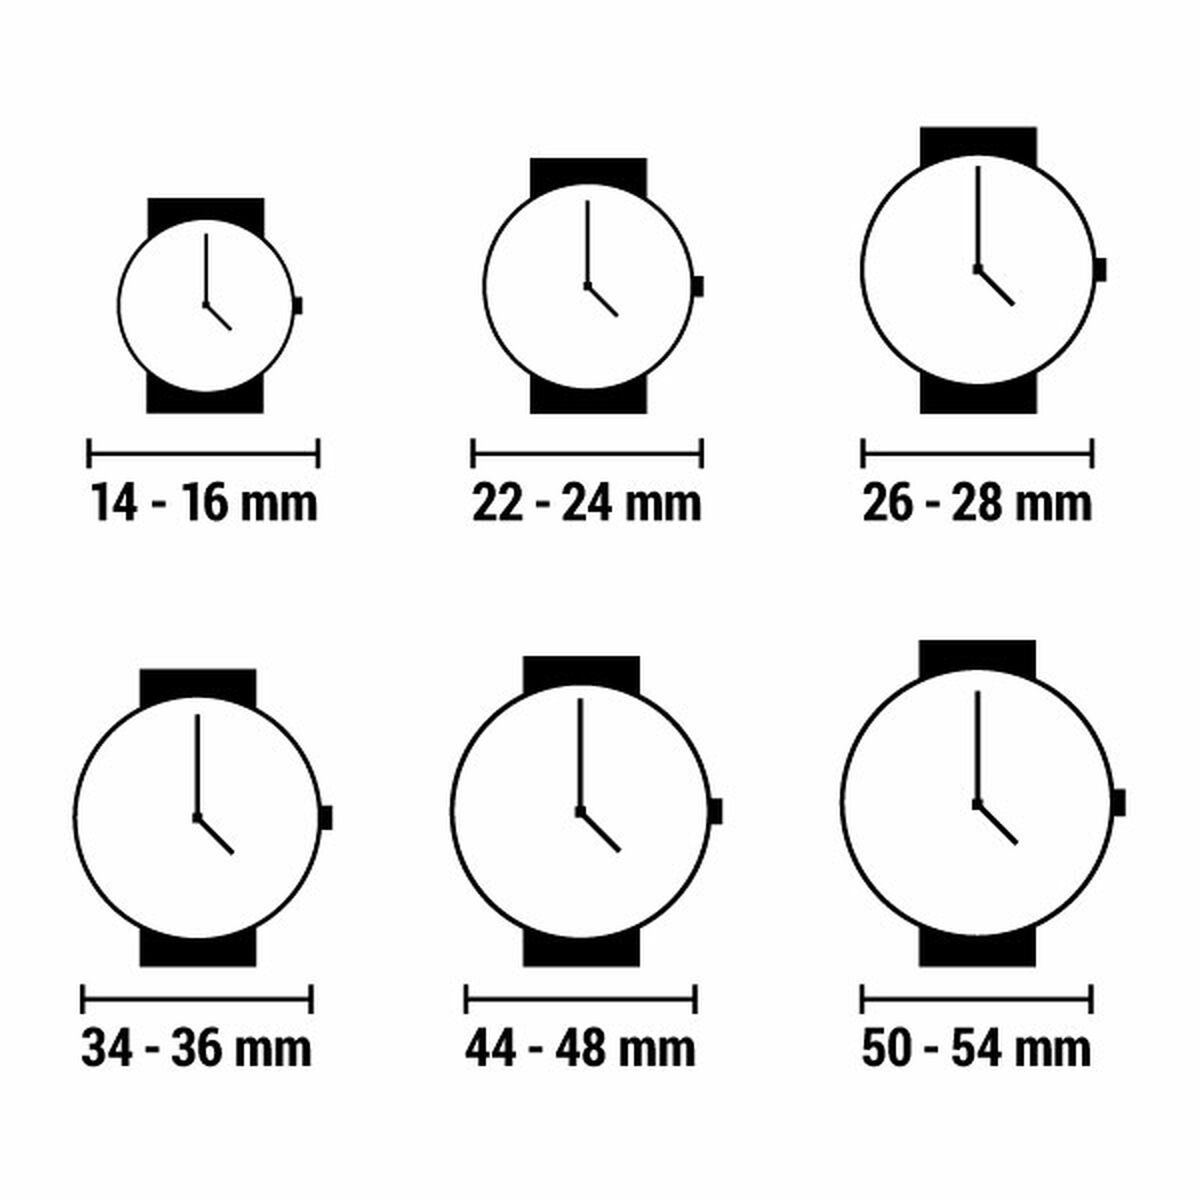 Horloge Dames Skechers SR6244